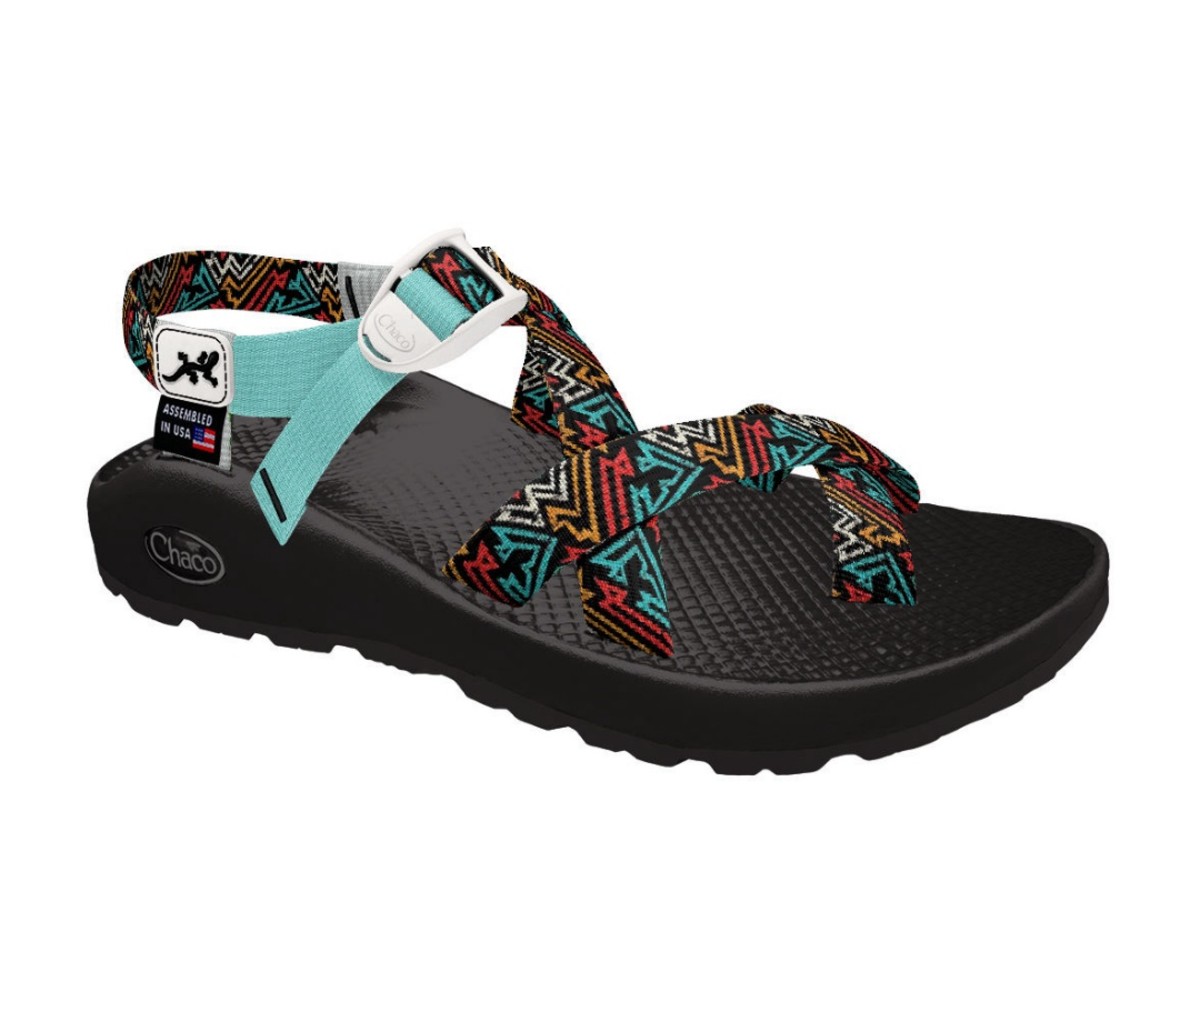 customizable gear customized Chaco Z/1 Sandal